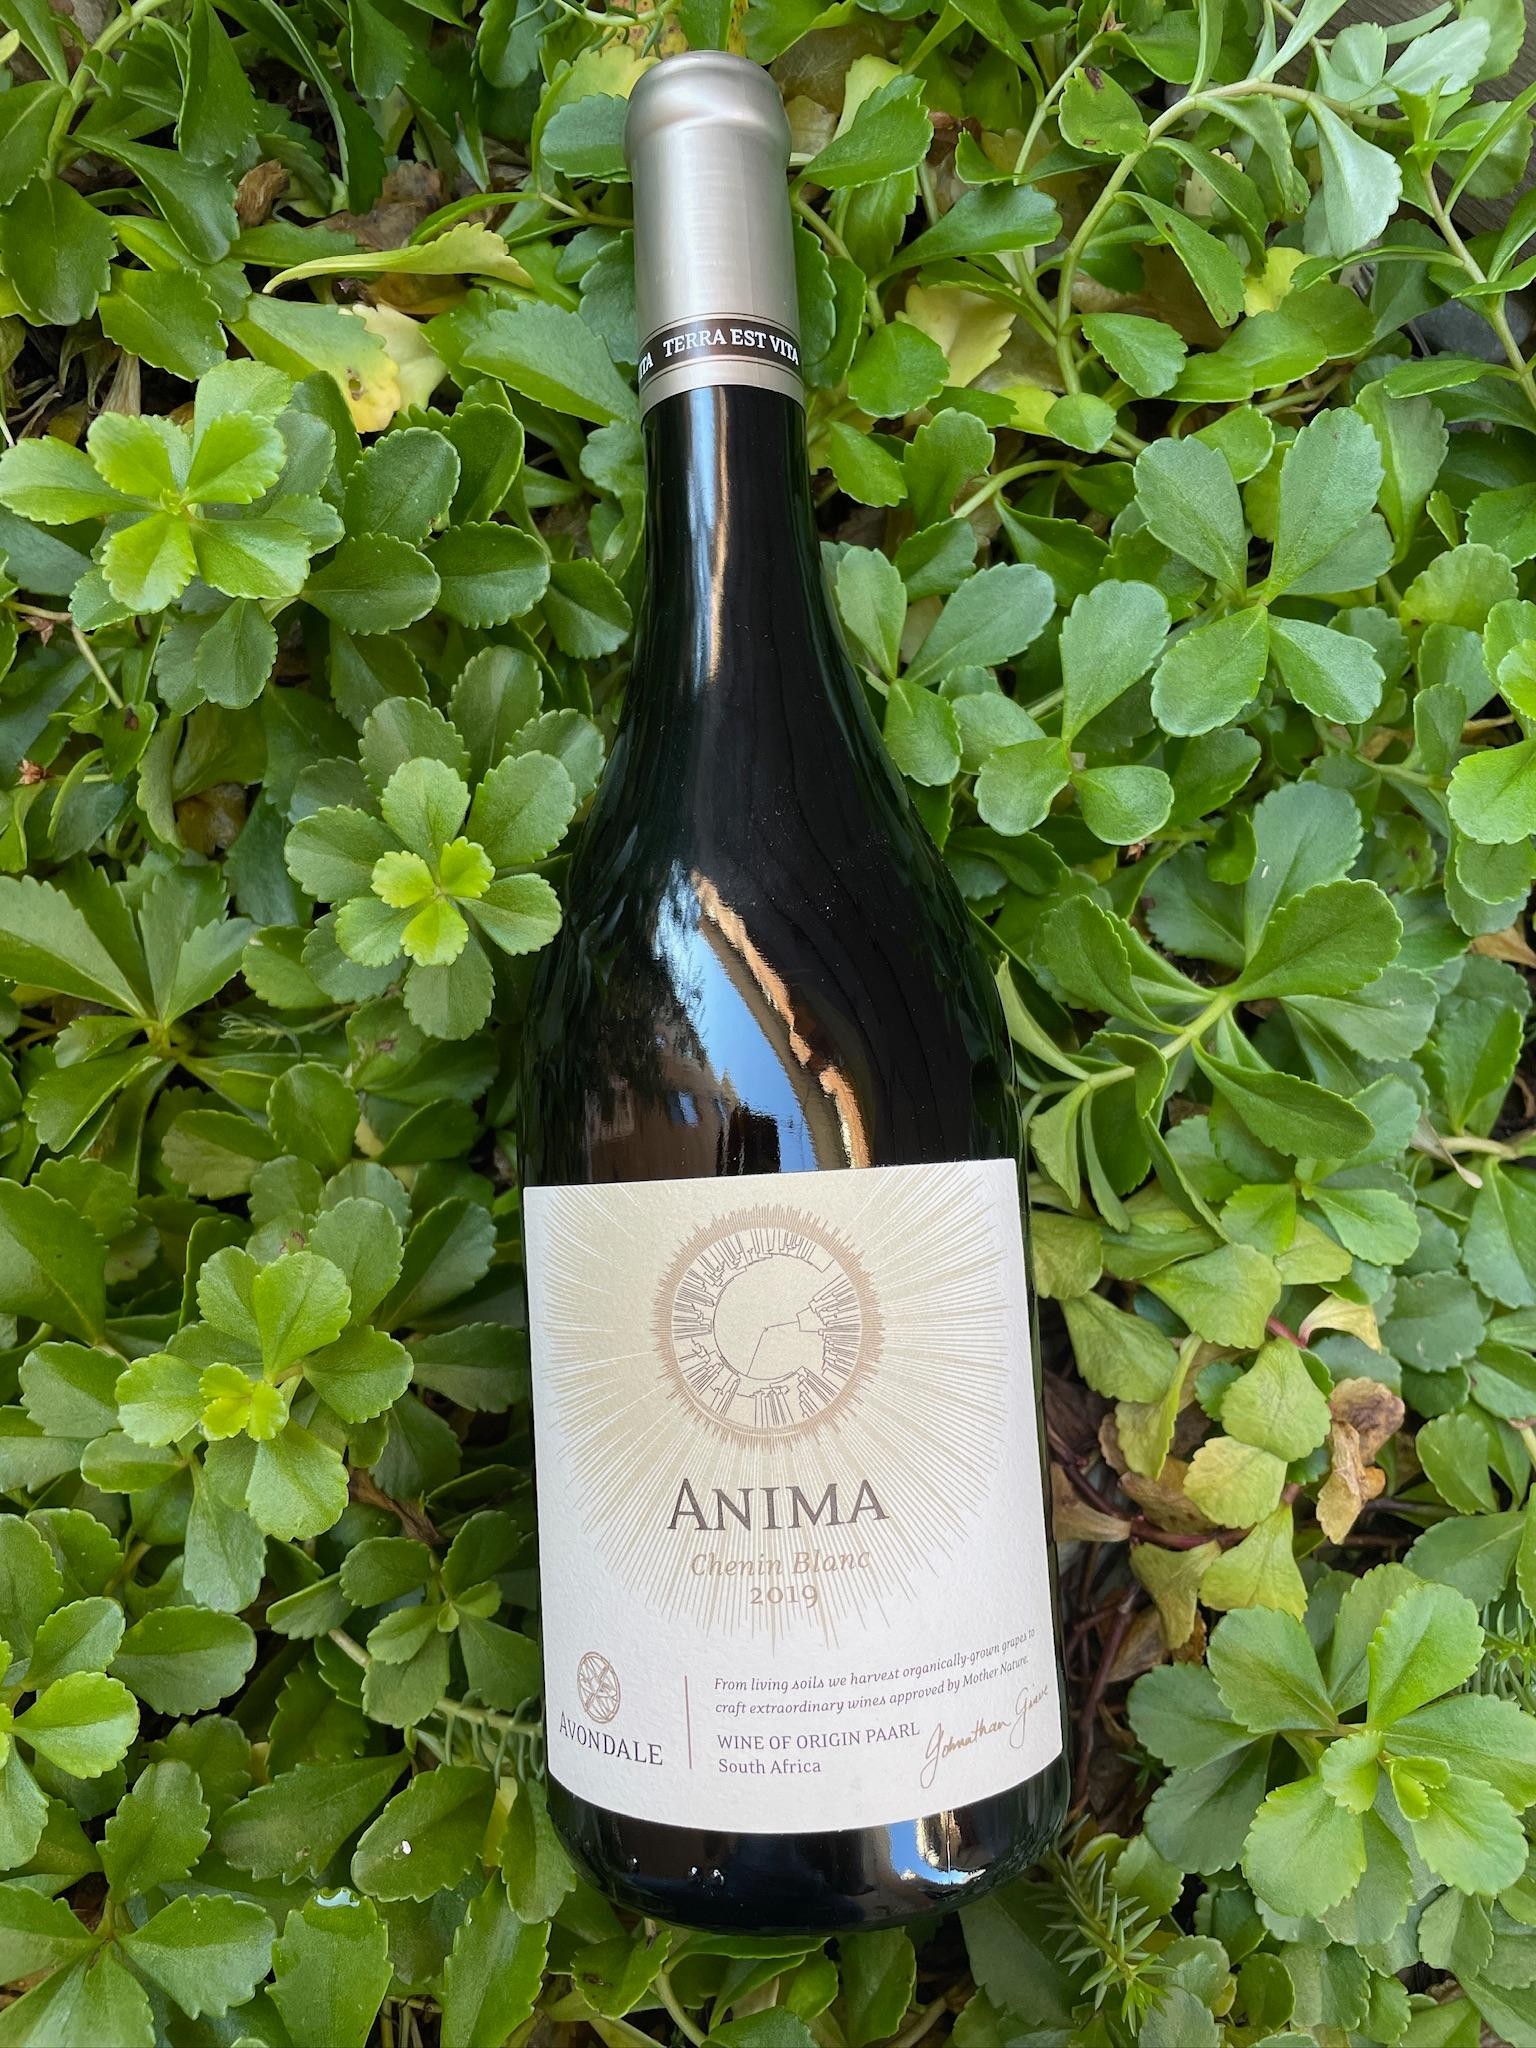 Avondale 'Anima' Chenin Blanc 2018